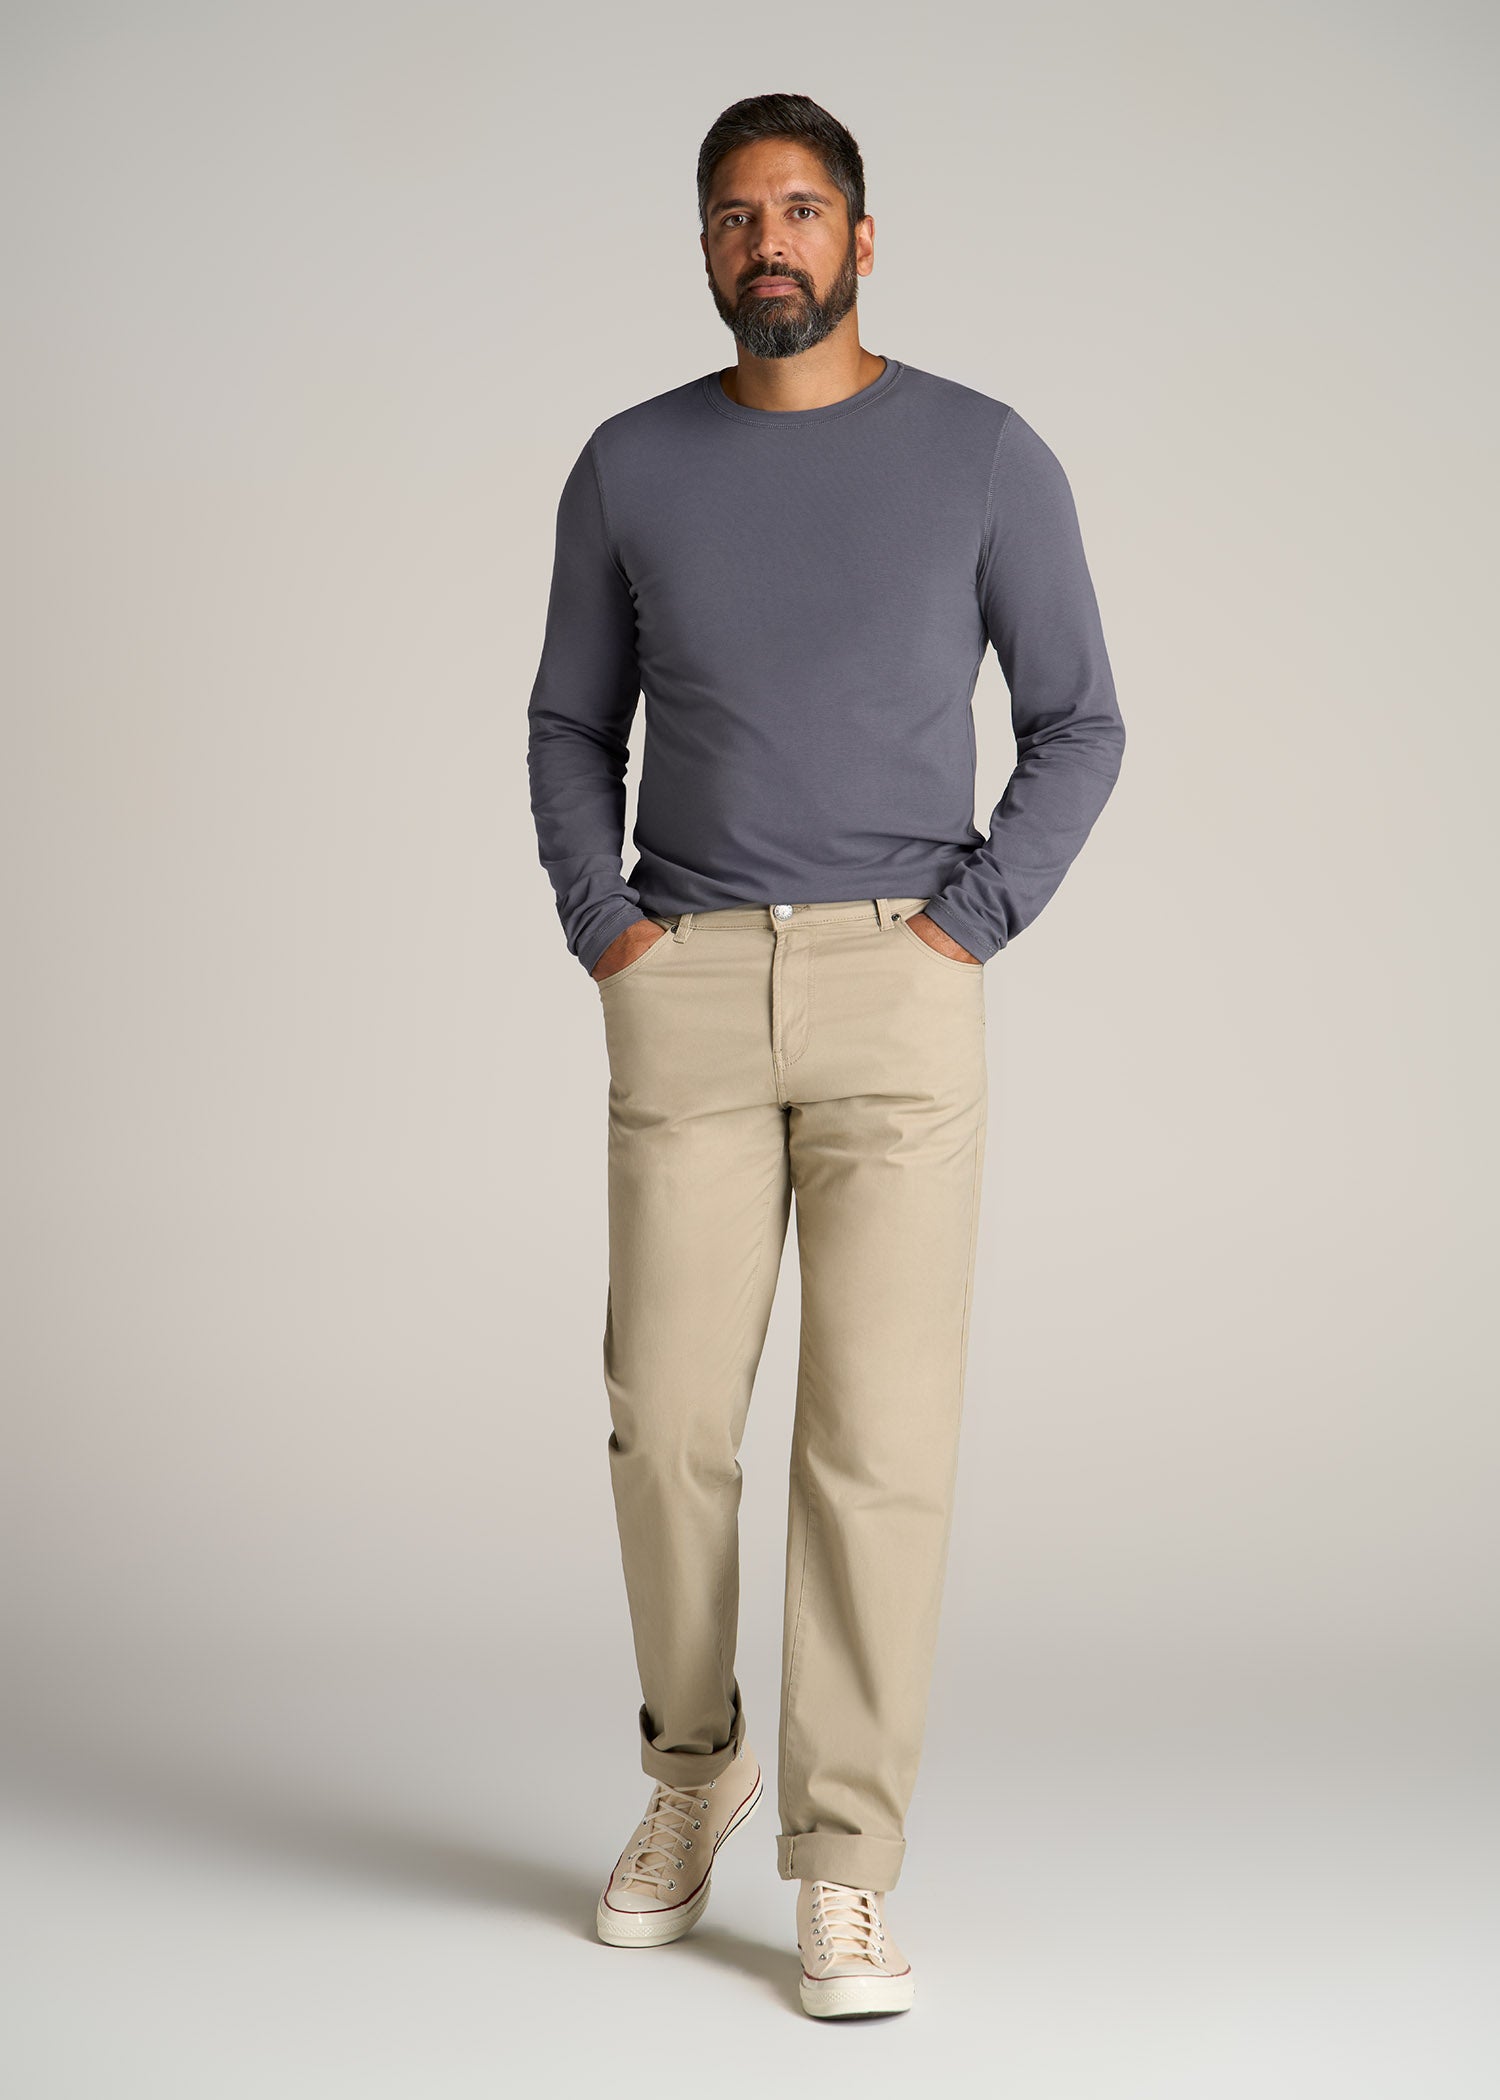 Original Essentials SLIM-FIT Long Sleeve Tall Men's T-Shirt in Black